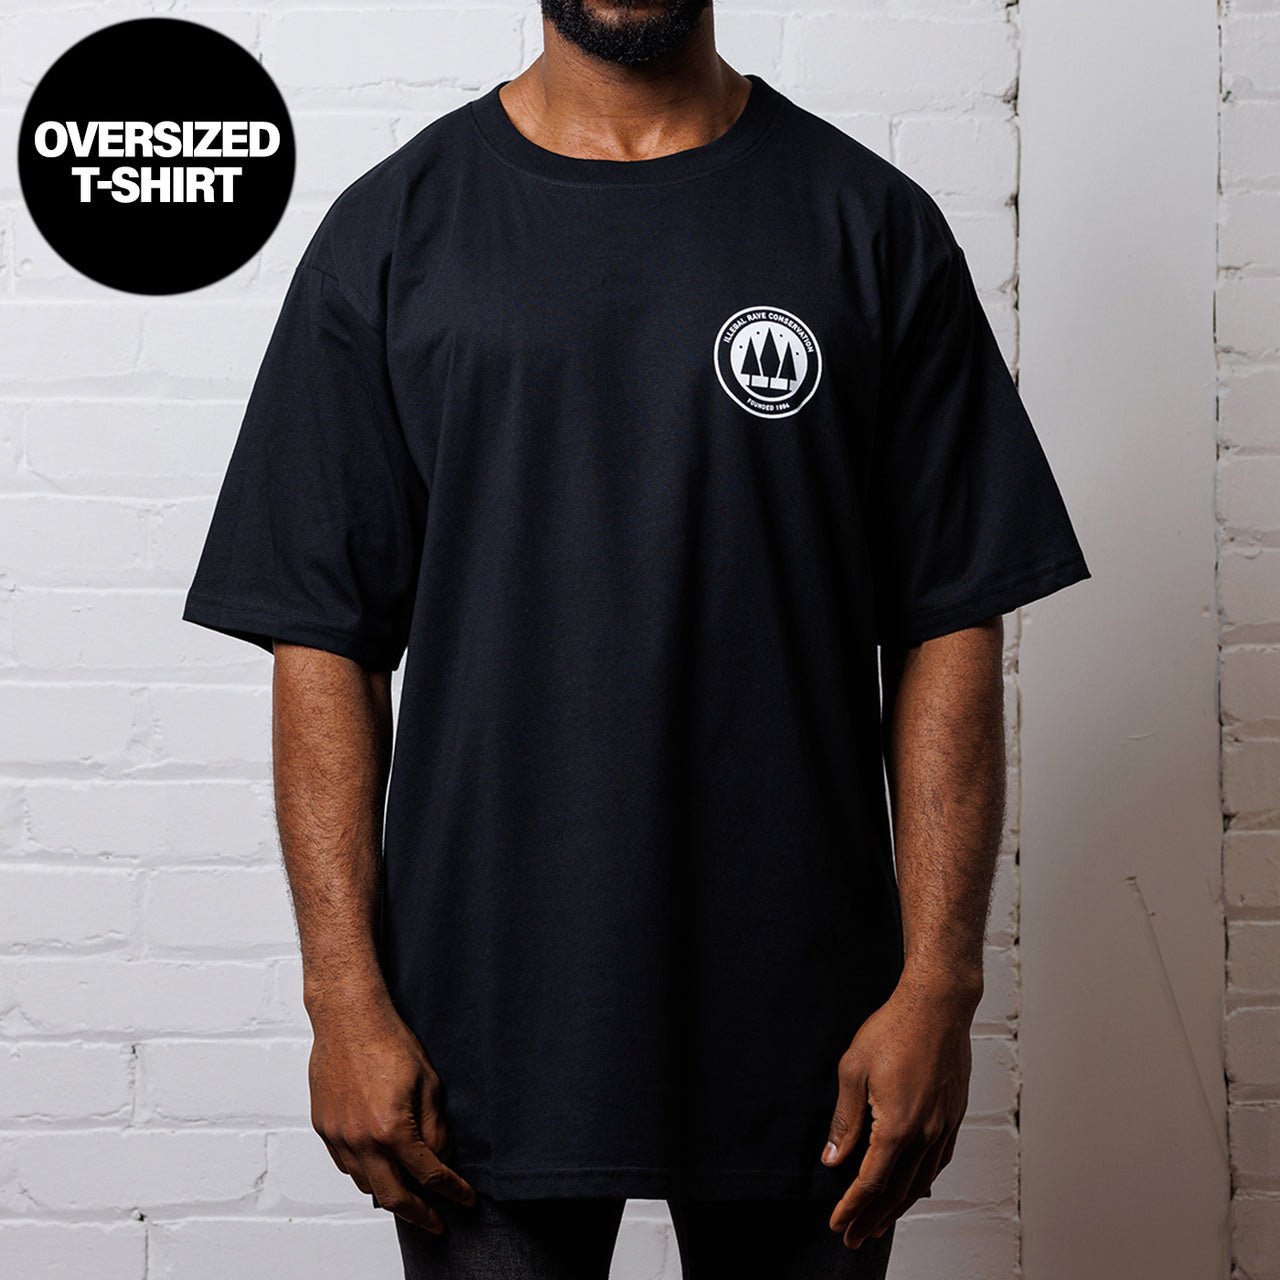 Crest Illegal Rave Conservation  - Oversized Tshirt - Black